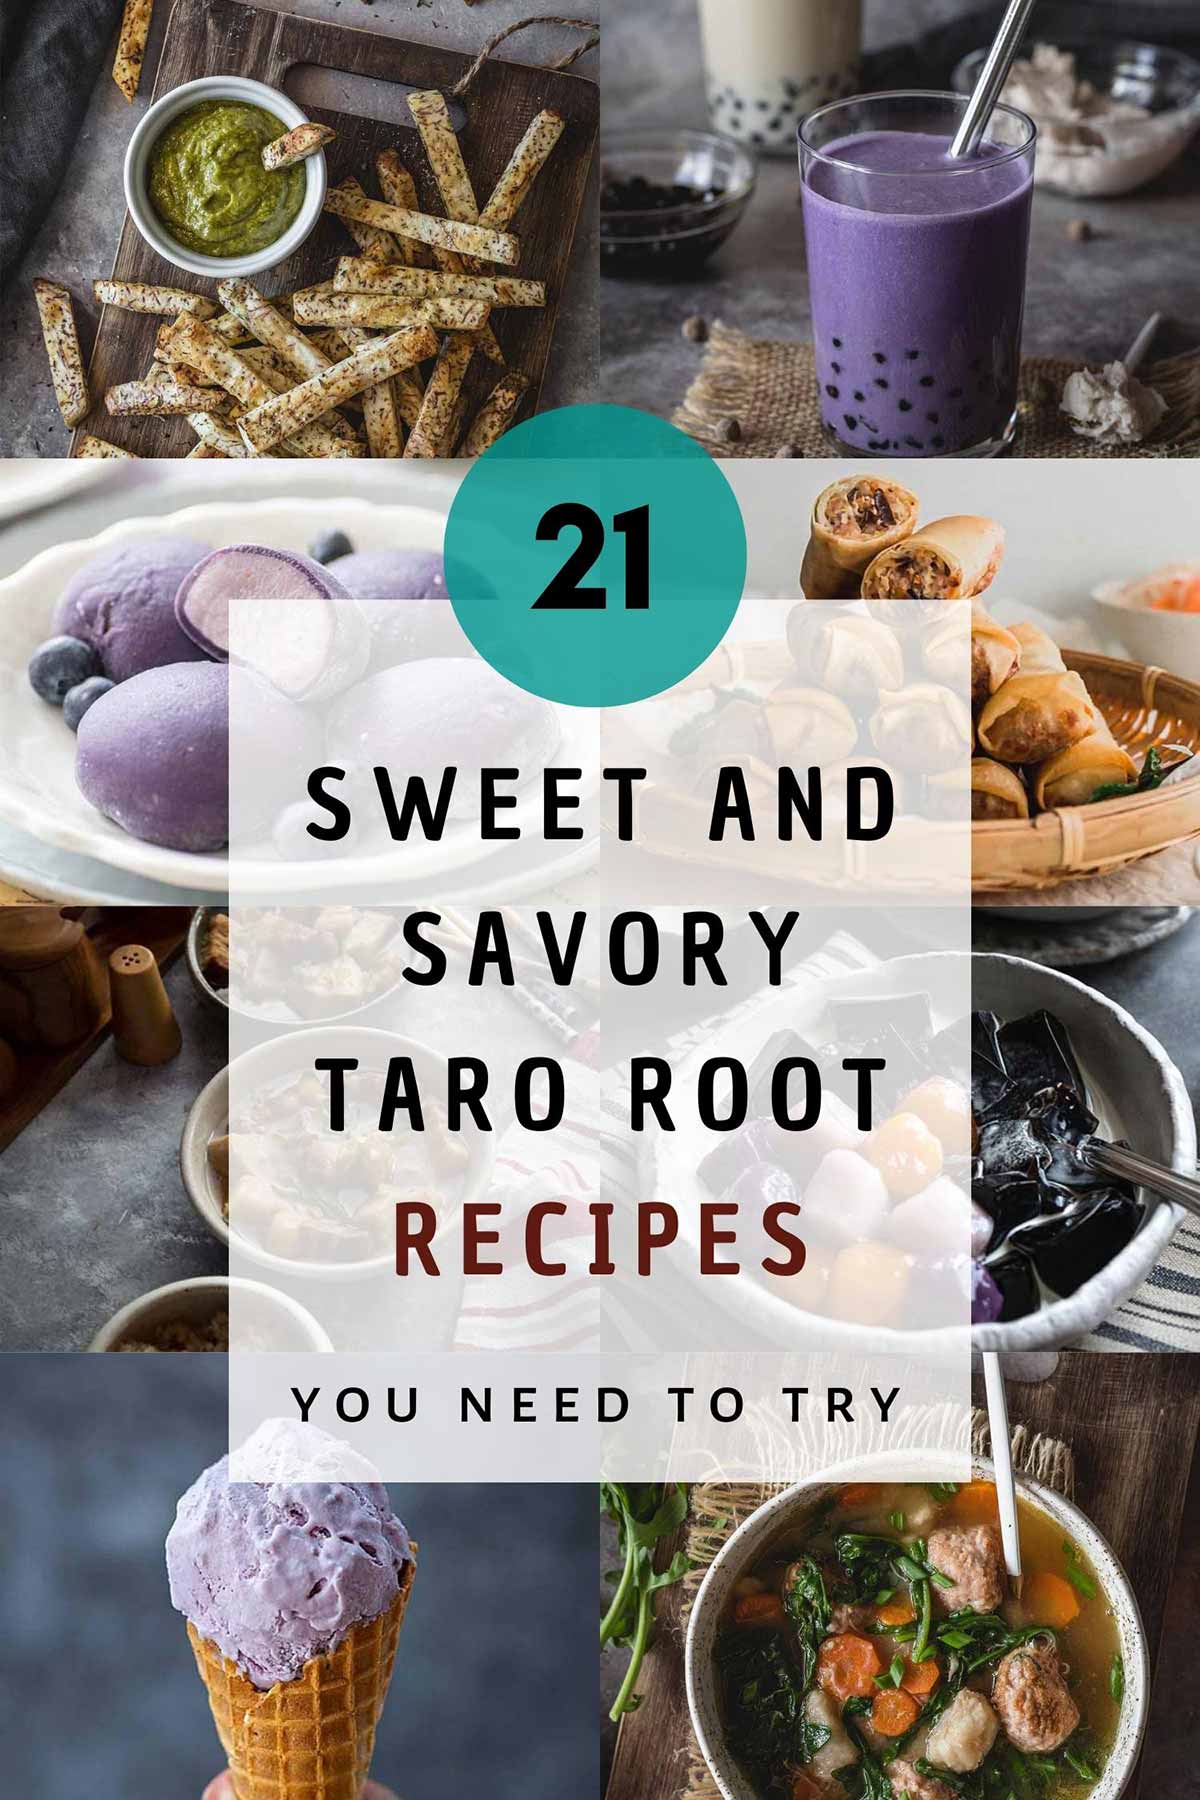 Taro root recipes featured image